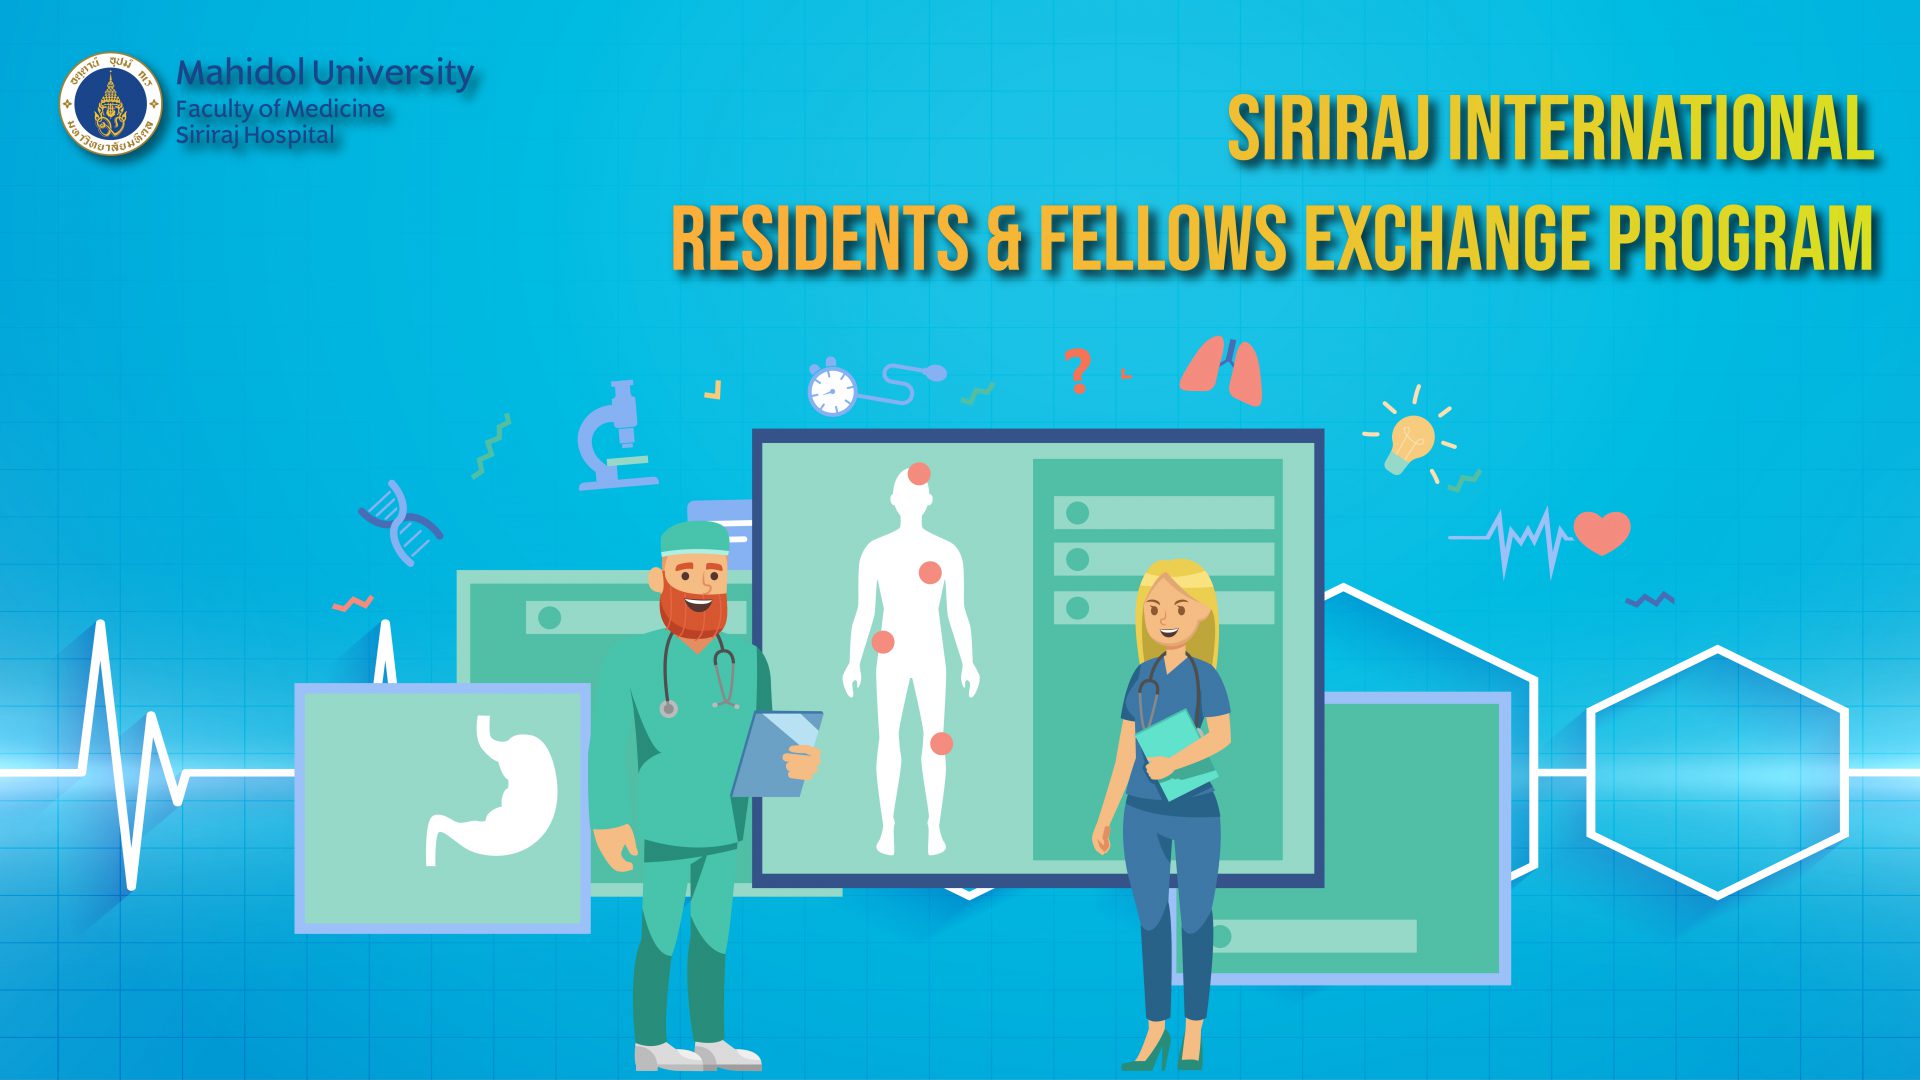 Siriraj International Residents & Fellows Exchange Program